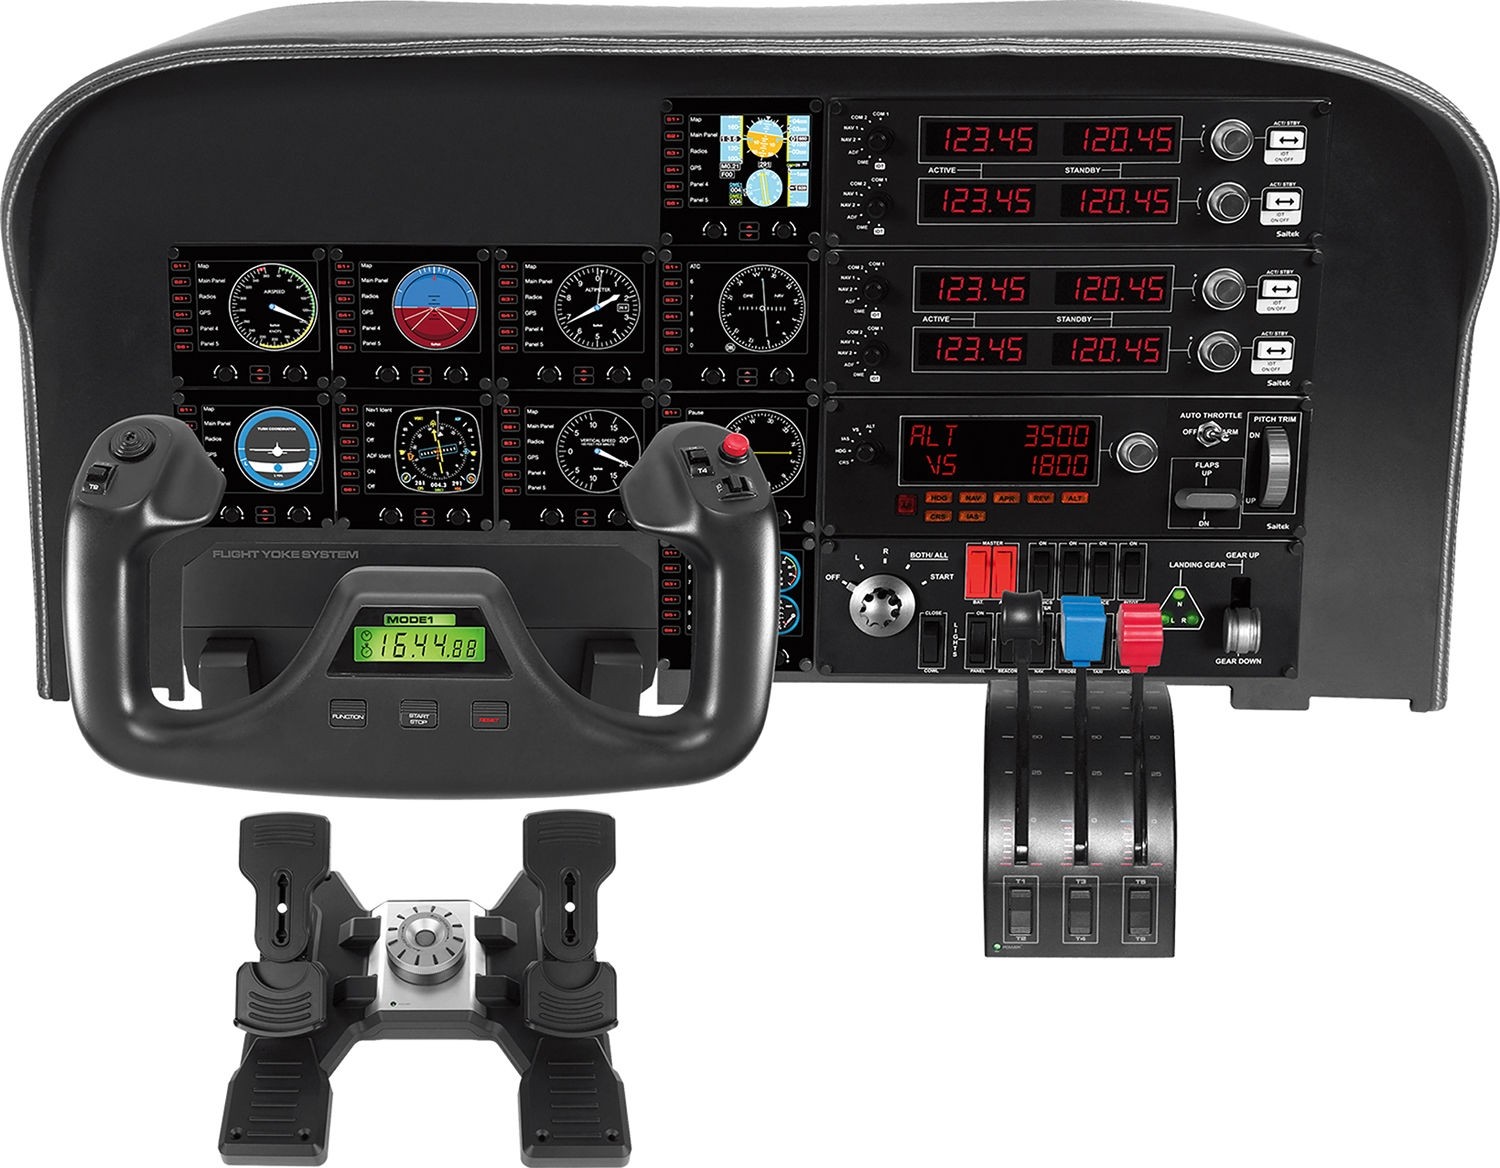 Logitech Flight Simulator Setup. Take your Experience to the Next Level!